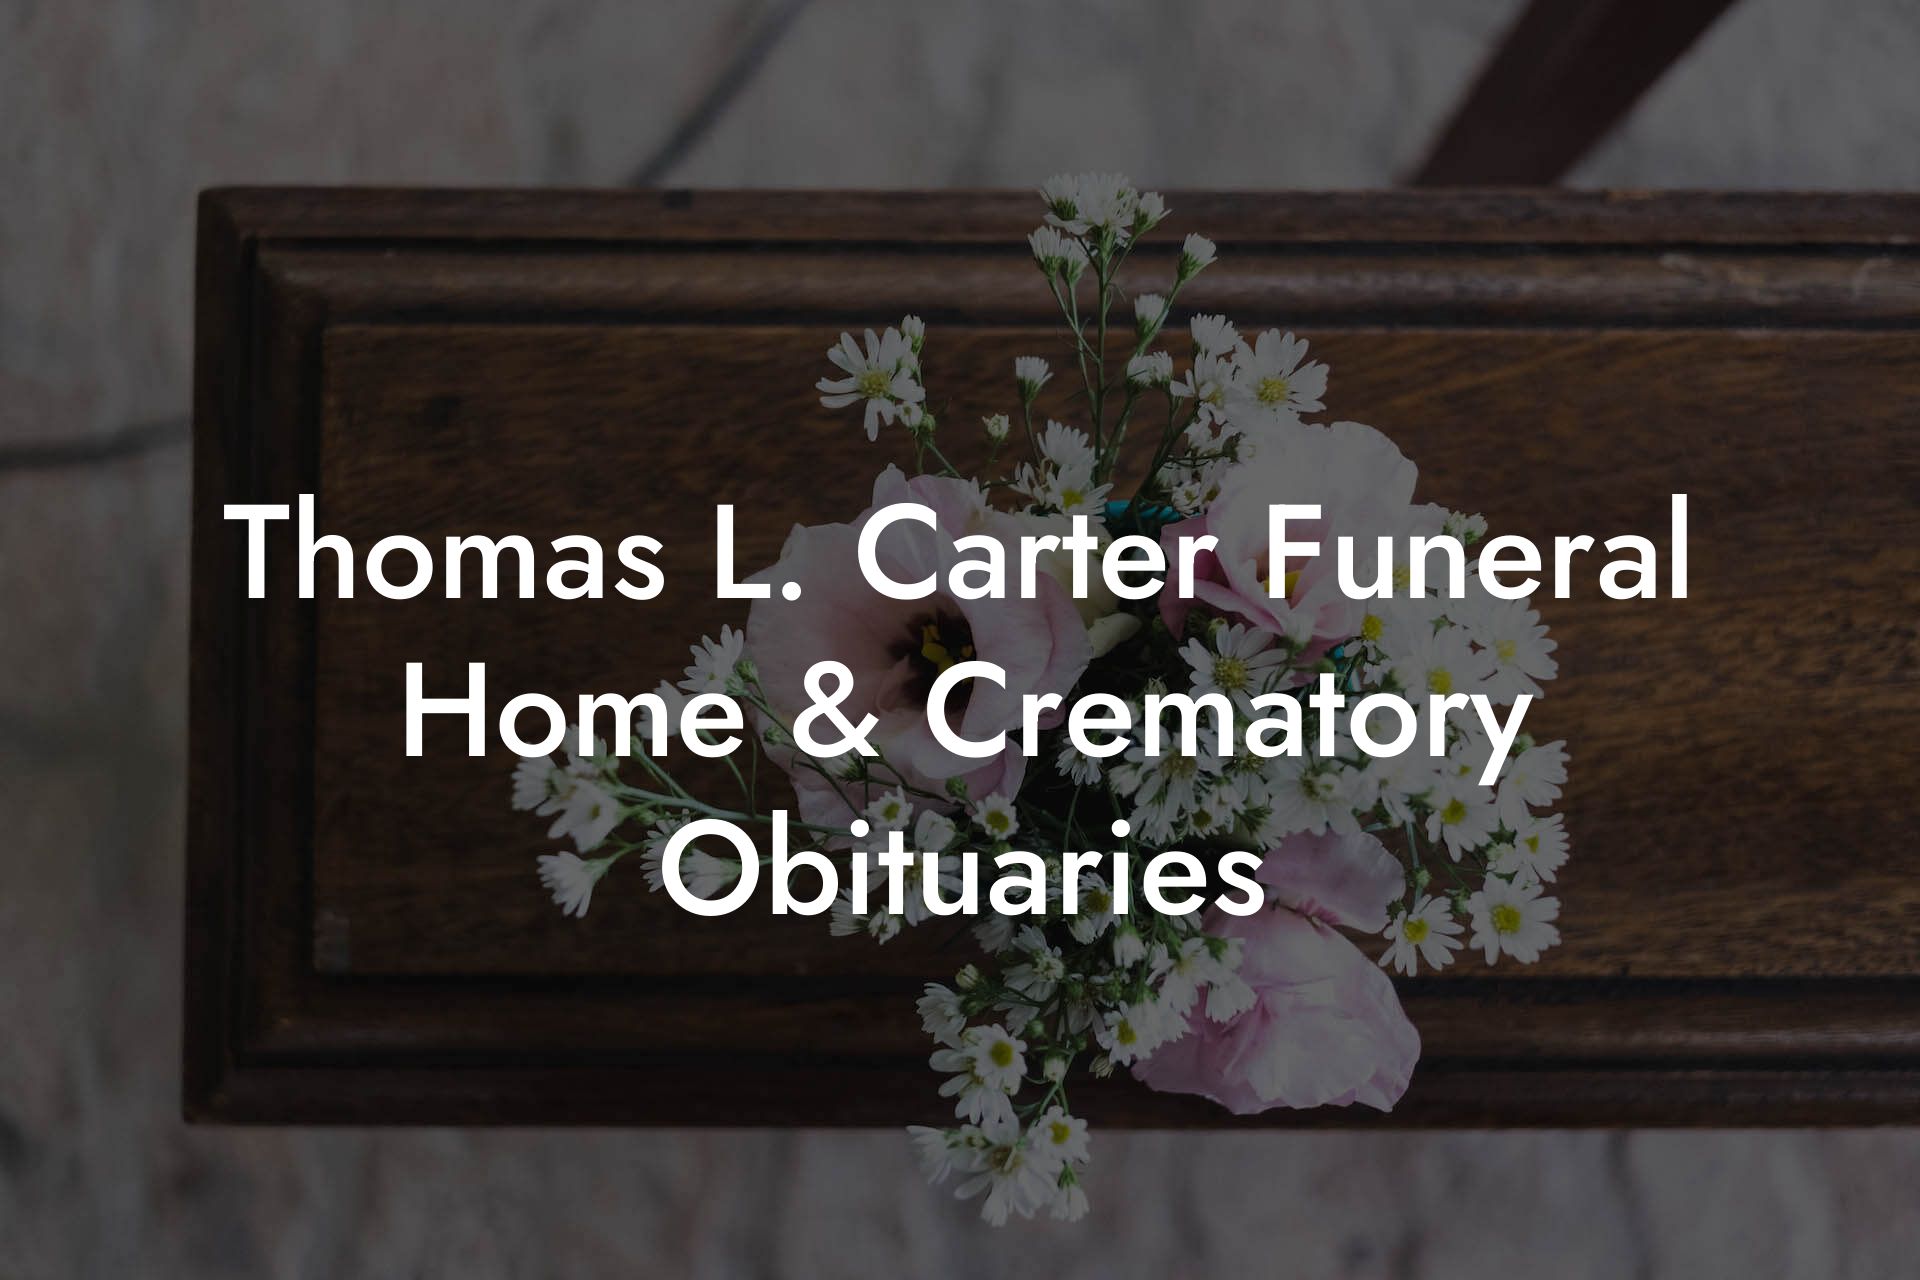 Thomas L. Carter Funeral Home & Crematory Obituaries